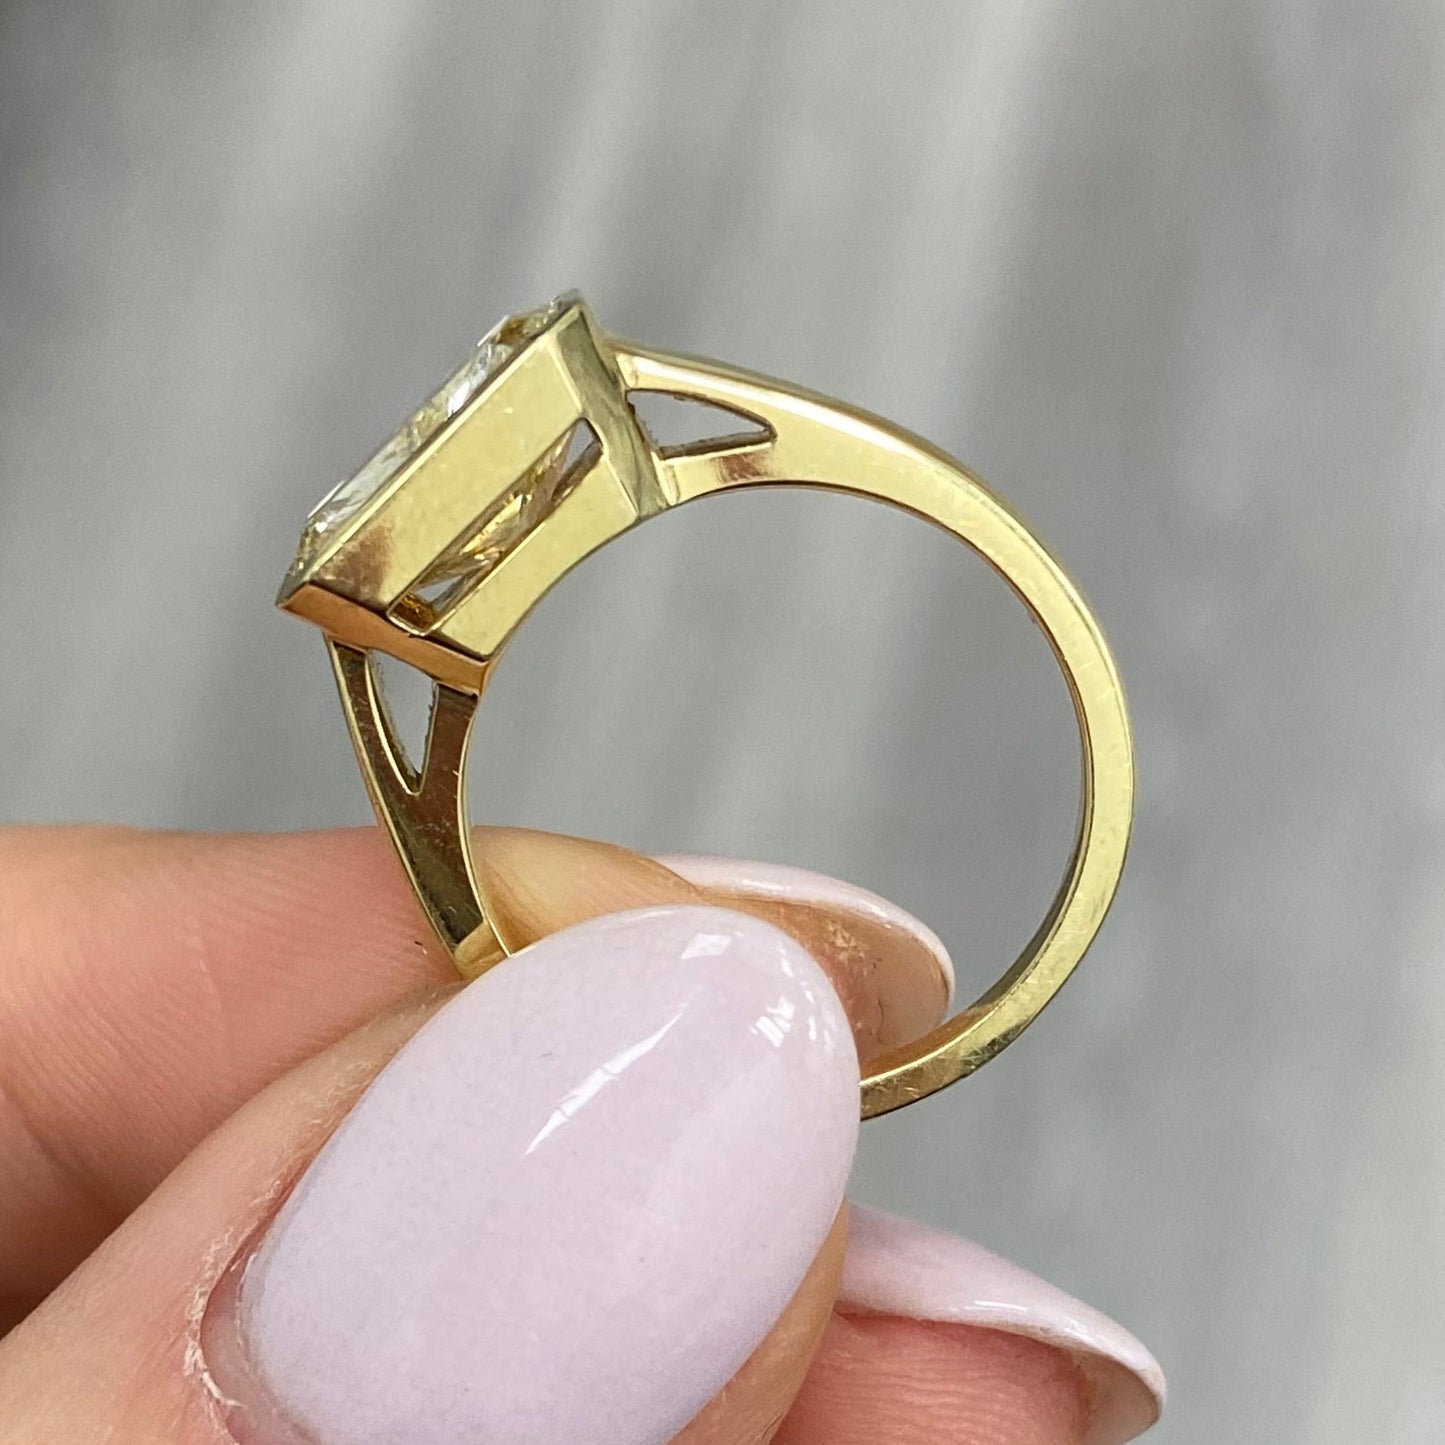 3 carat fancy light yellow diamond ring. Fancy light yellow diamond. Gia certified fancy light yellow diamond. Yellow diamond engagement ring. Canary yellow diamond ring.